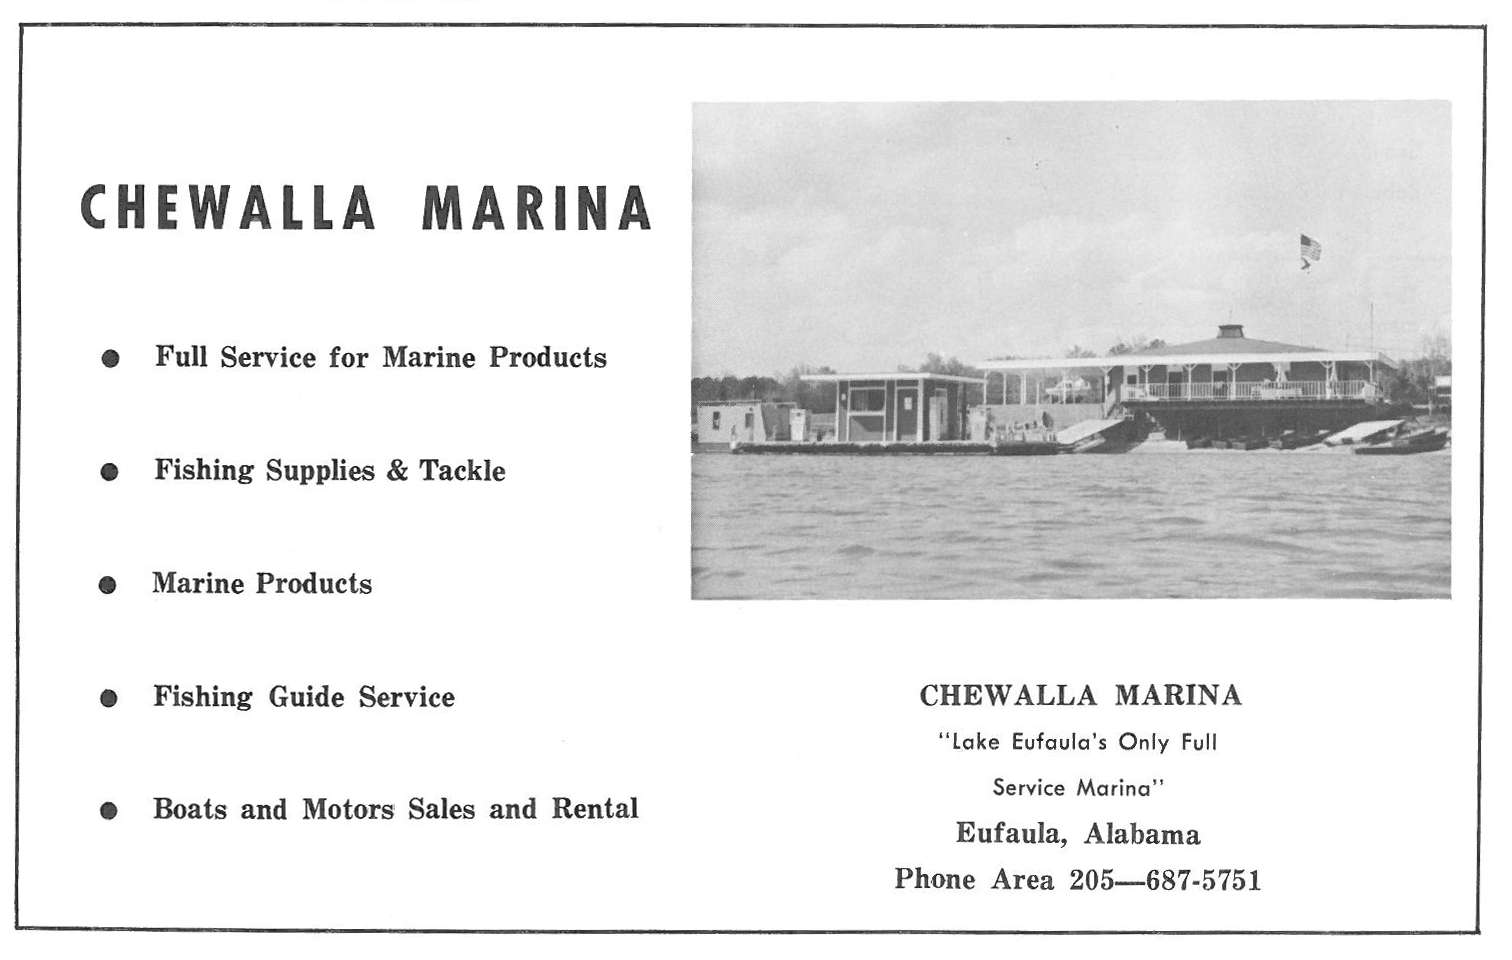 Chewalla Marina is up next, located in Eufaula, Ala. 